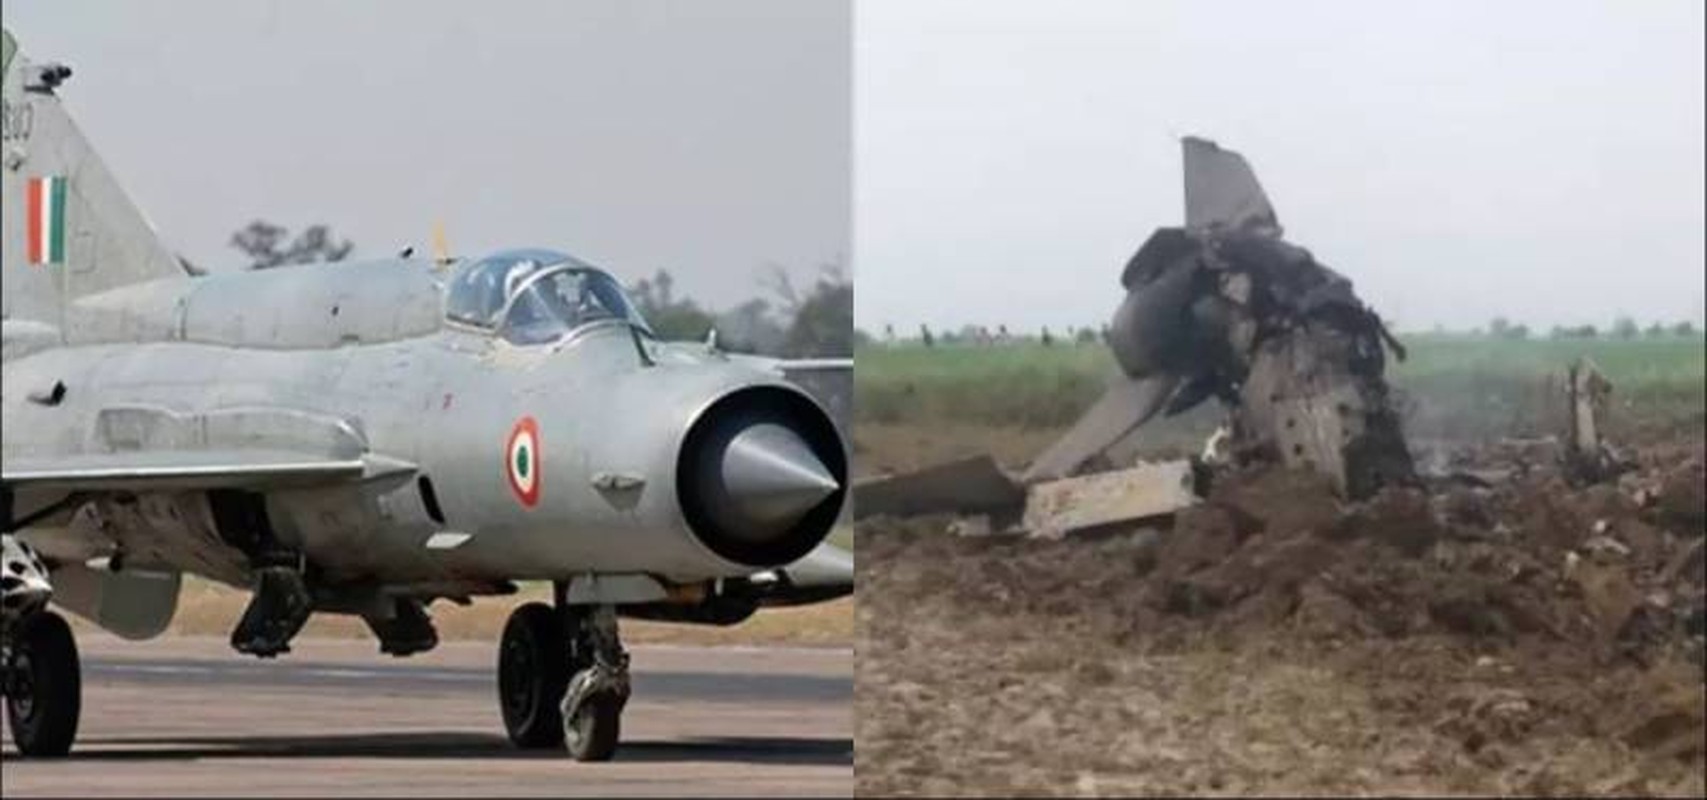 Noi oan cua MiG-21 An Do: Hoan toan khong phai “quan tai bay”-Hinh-2